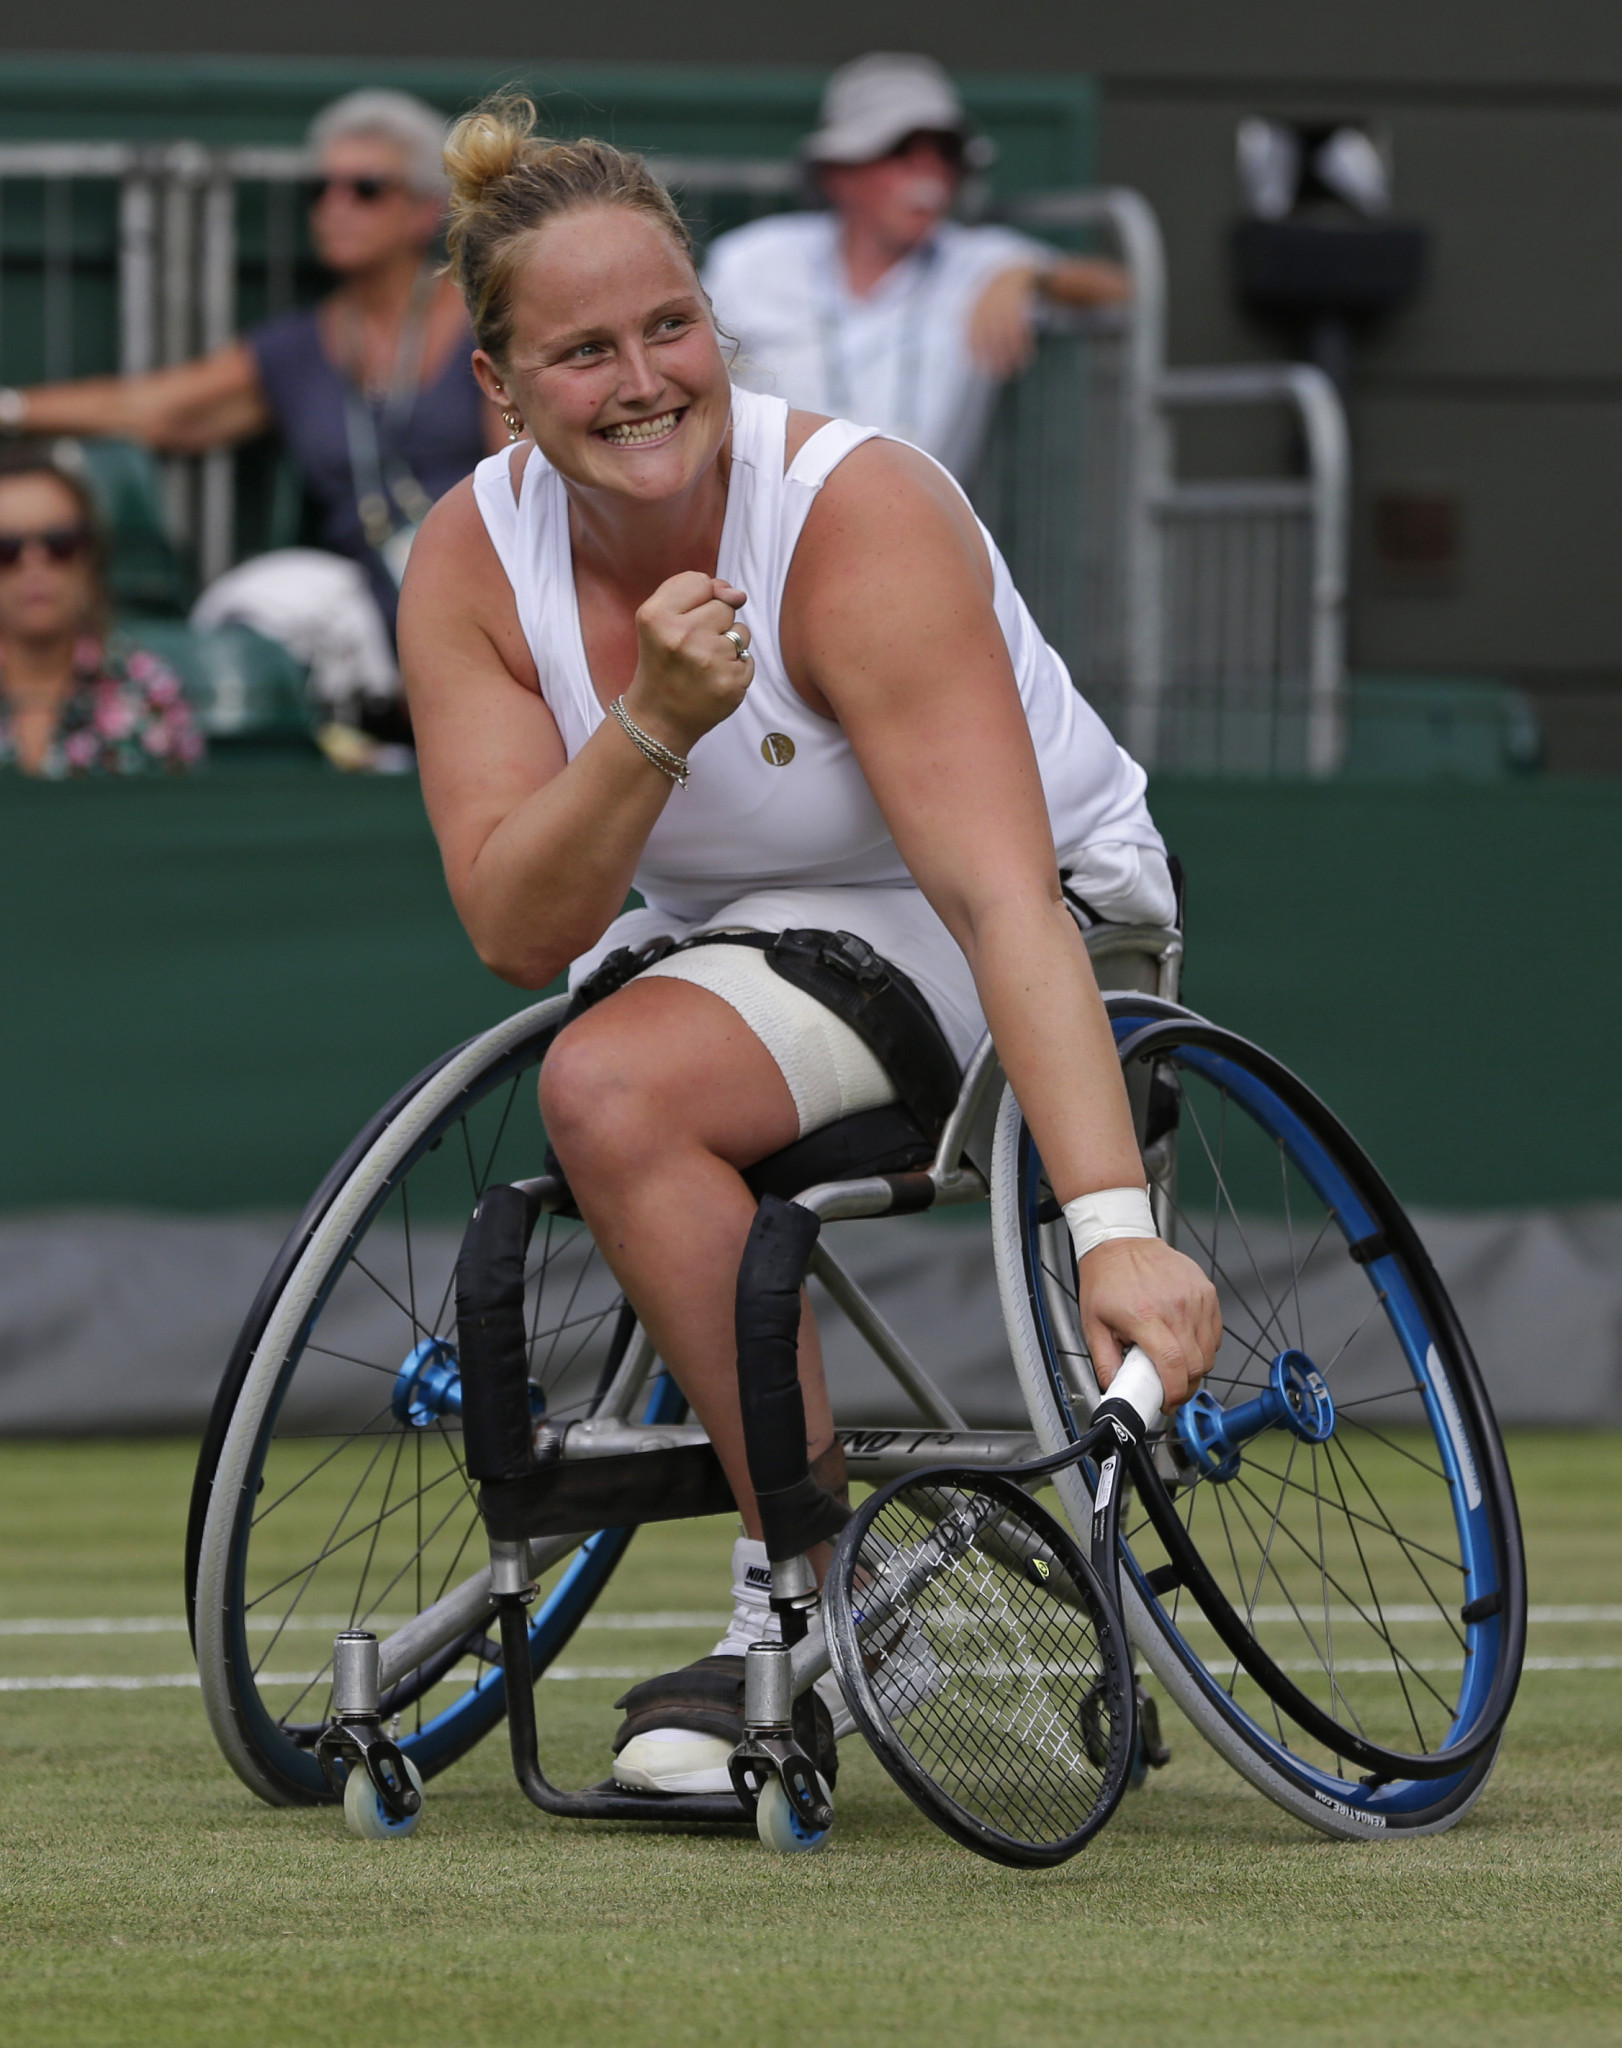 Anniek van Koot won a tight semi-final to earn a place in the Wimbledon women's wheelchair singles final against fellow Dutchwoman Diede de Groot, the defending champion ©Getty Images  